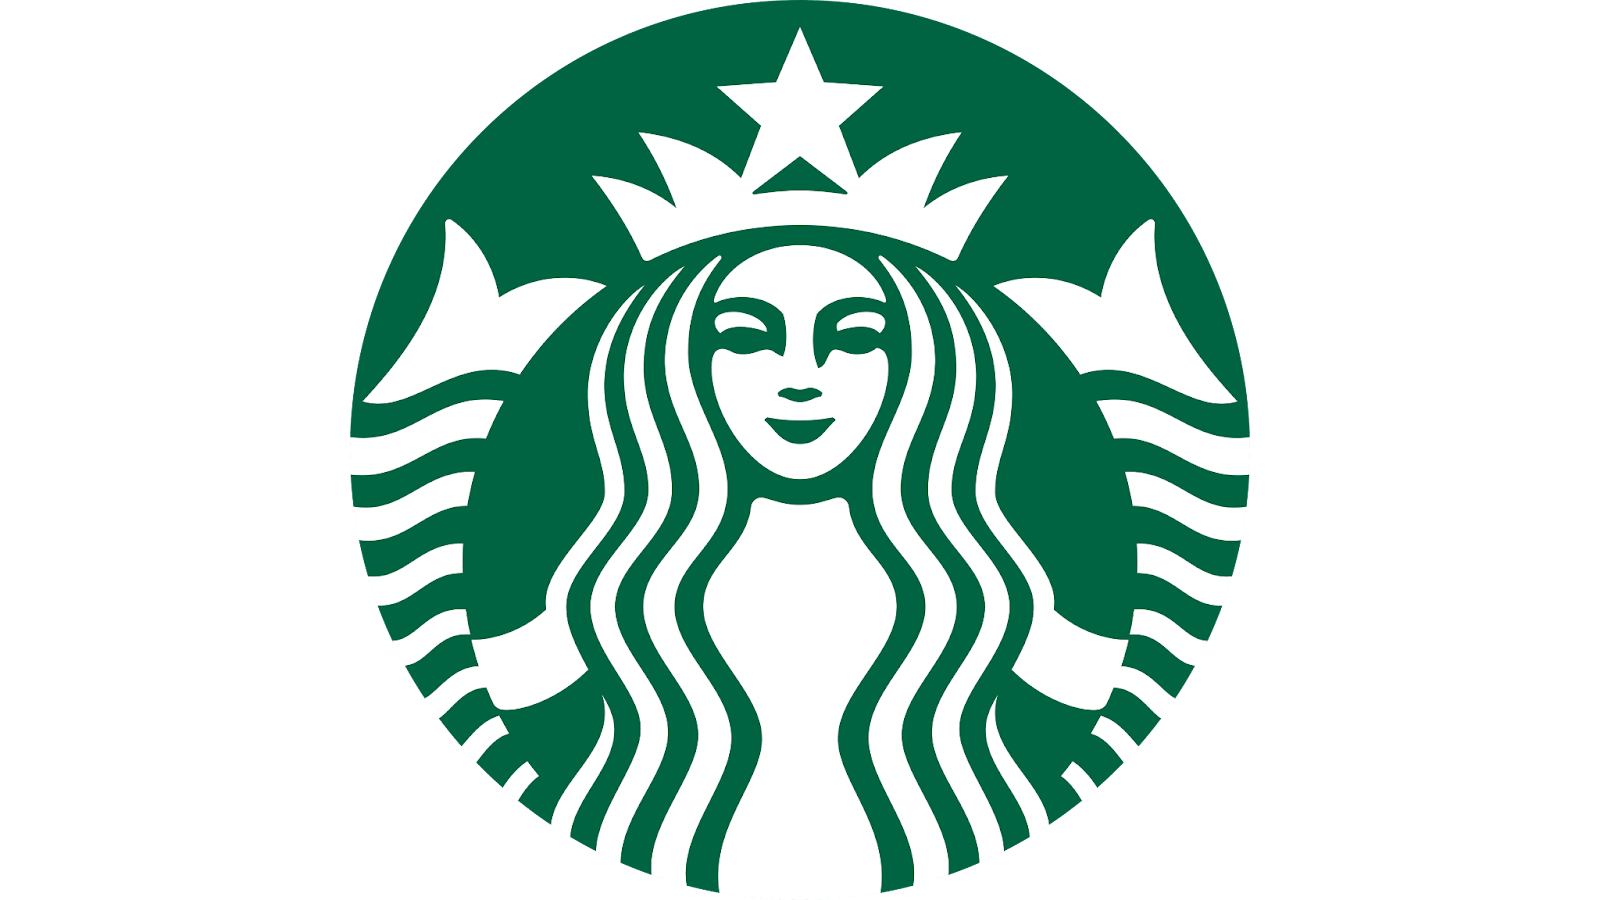 popular branding colors in the food industry - Starbucks logo